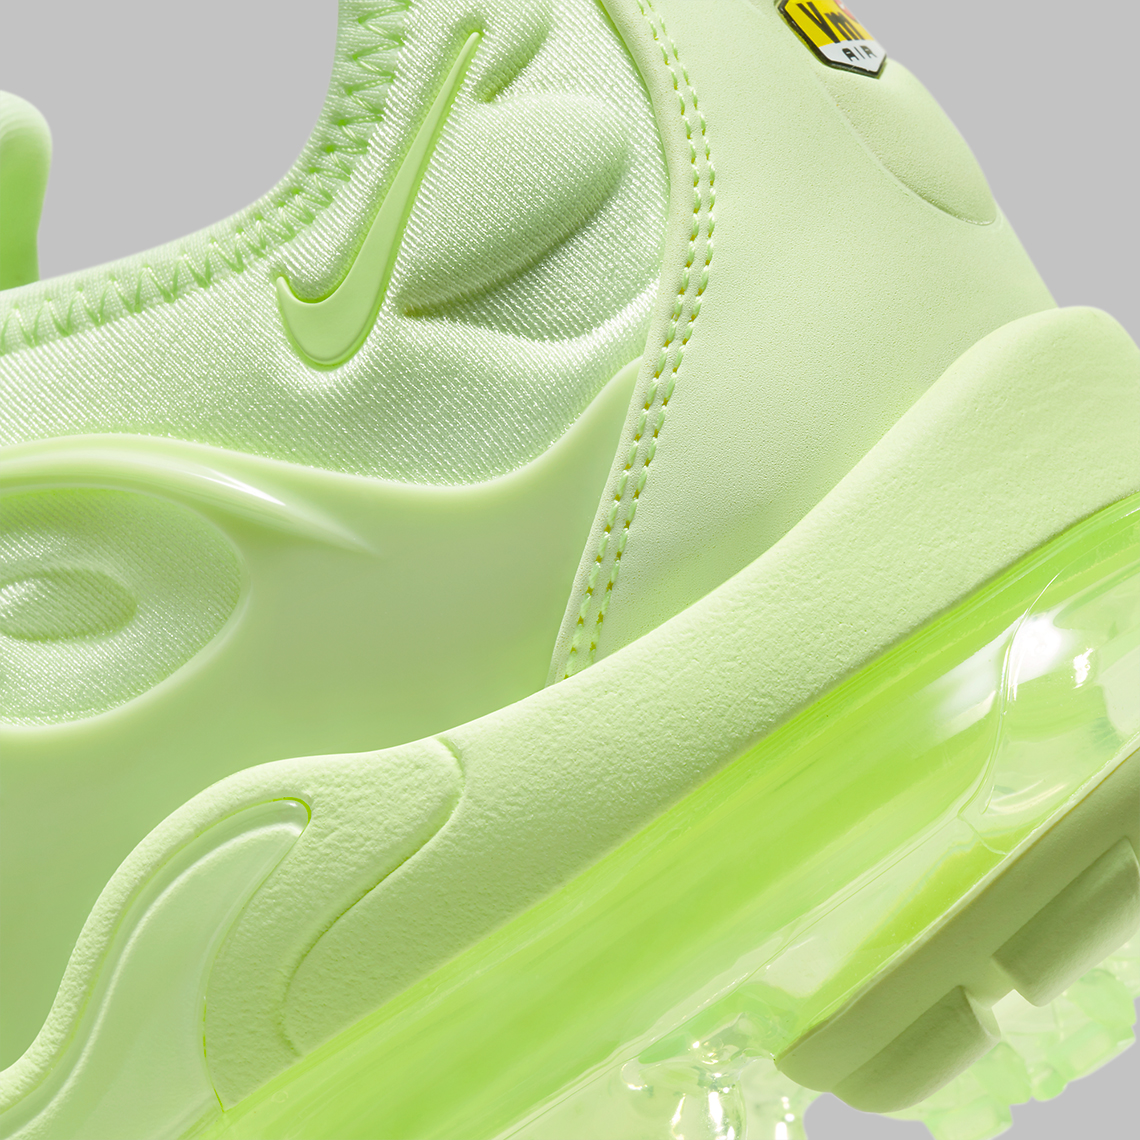 Nike Vapormax Plus Barely Volt DJ3023-700 | SneakerNews.com